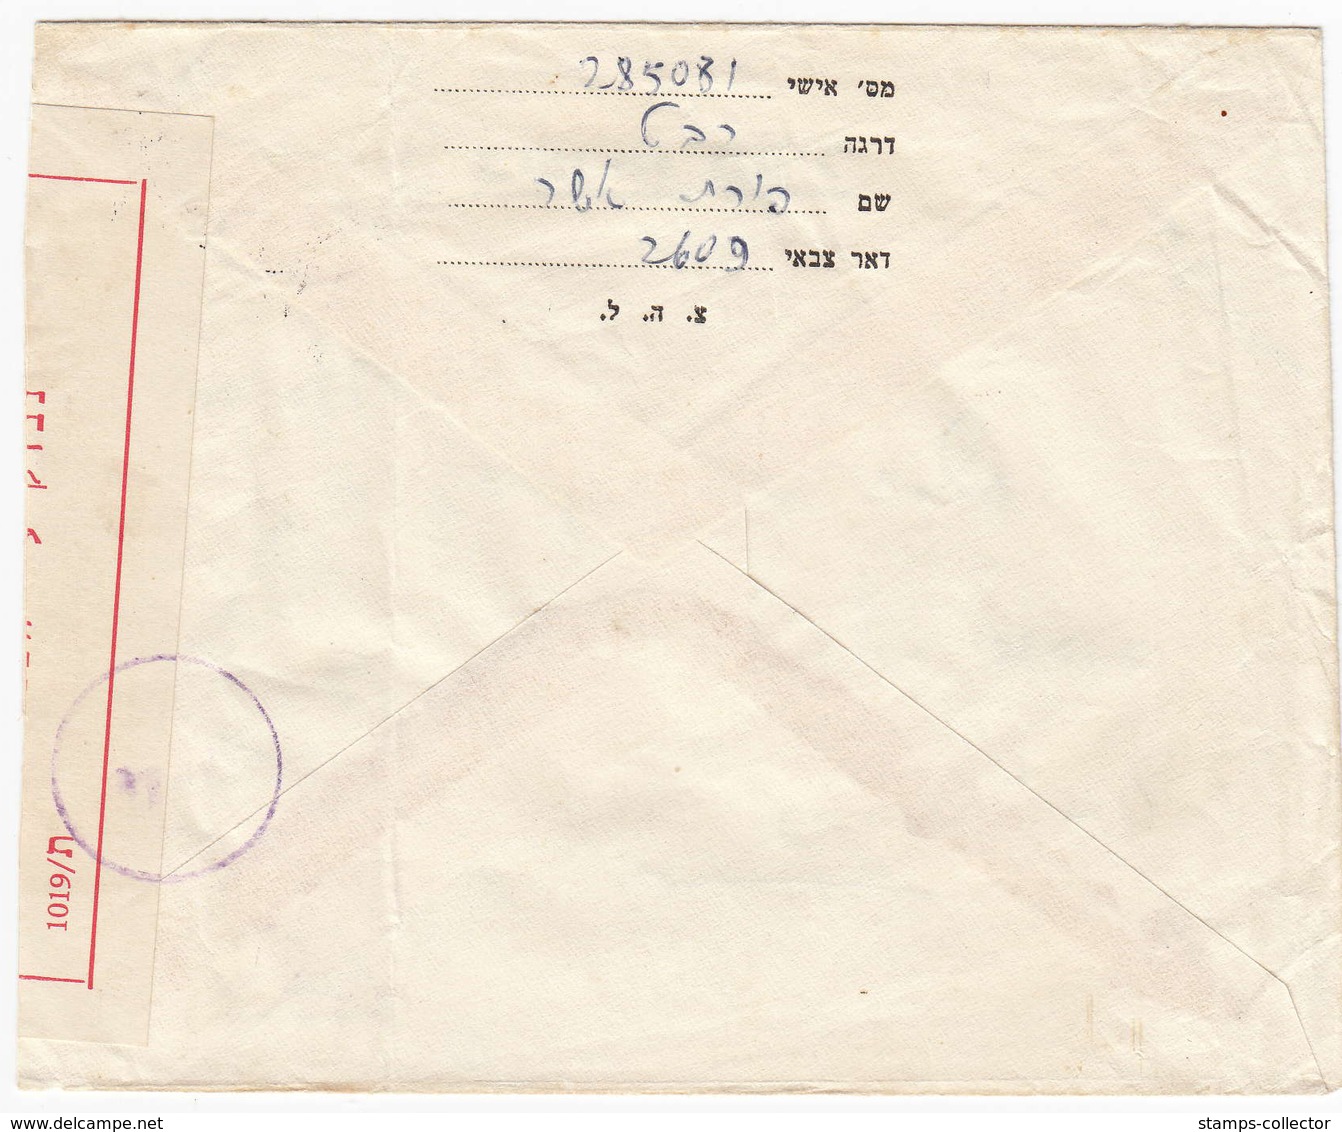 Israel. Cenzur Letter 11.11.55 - Military Mail Service